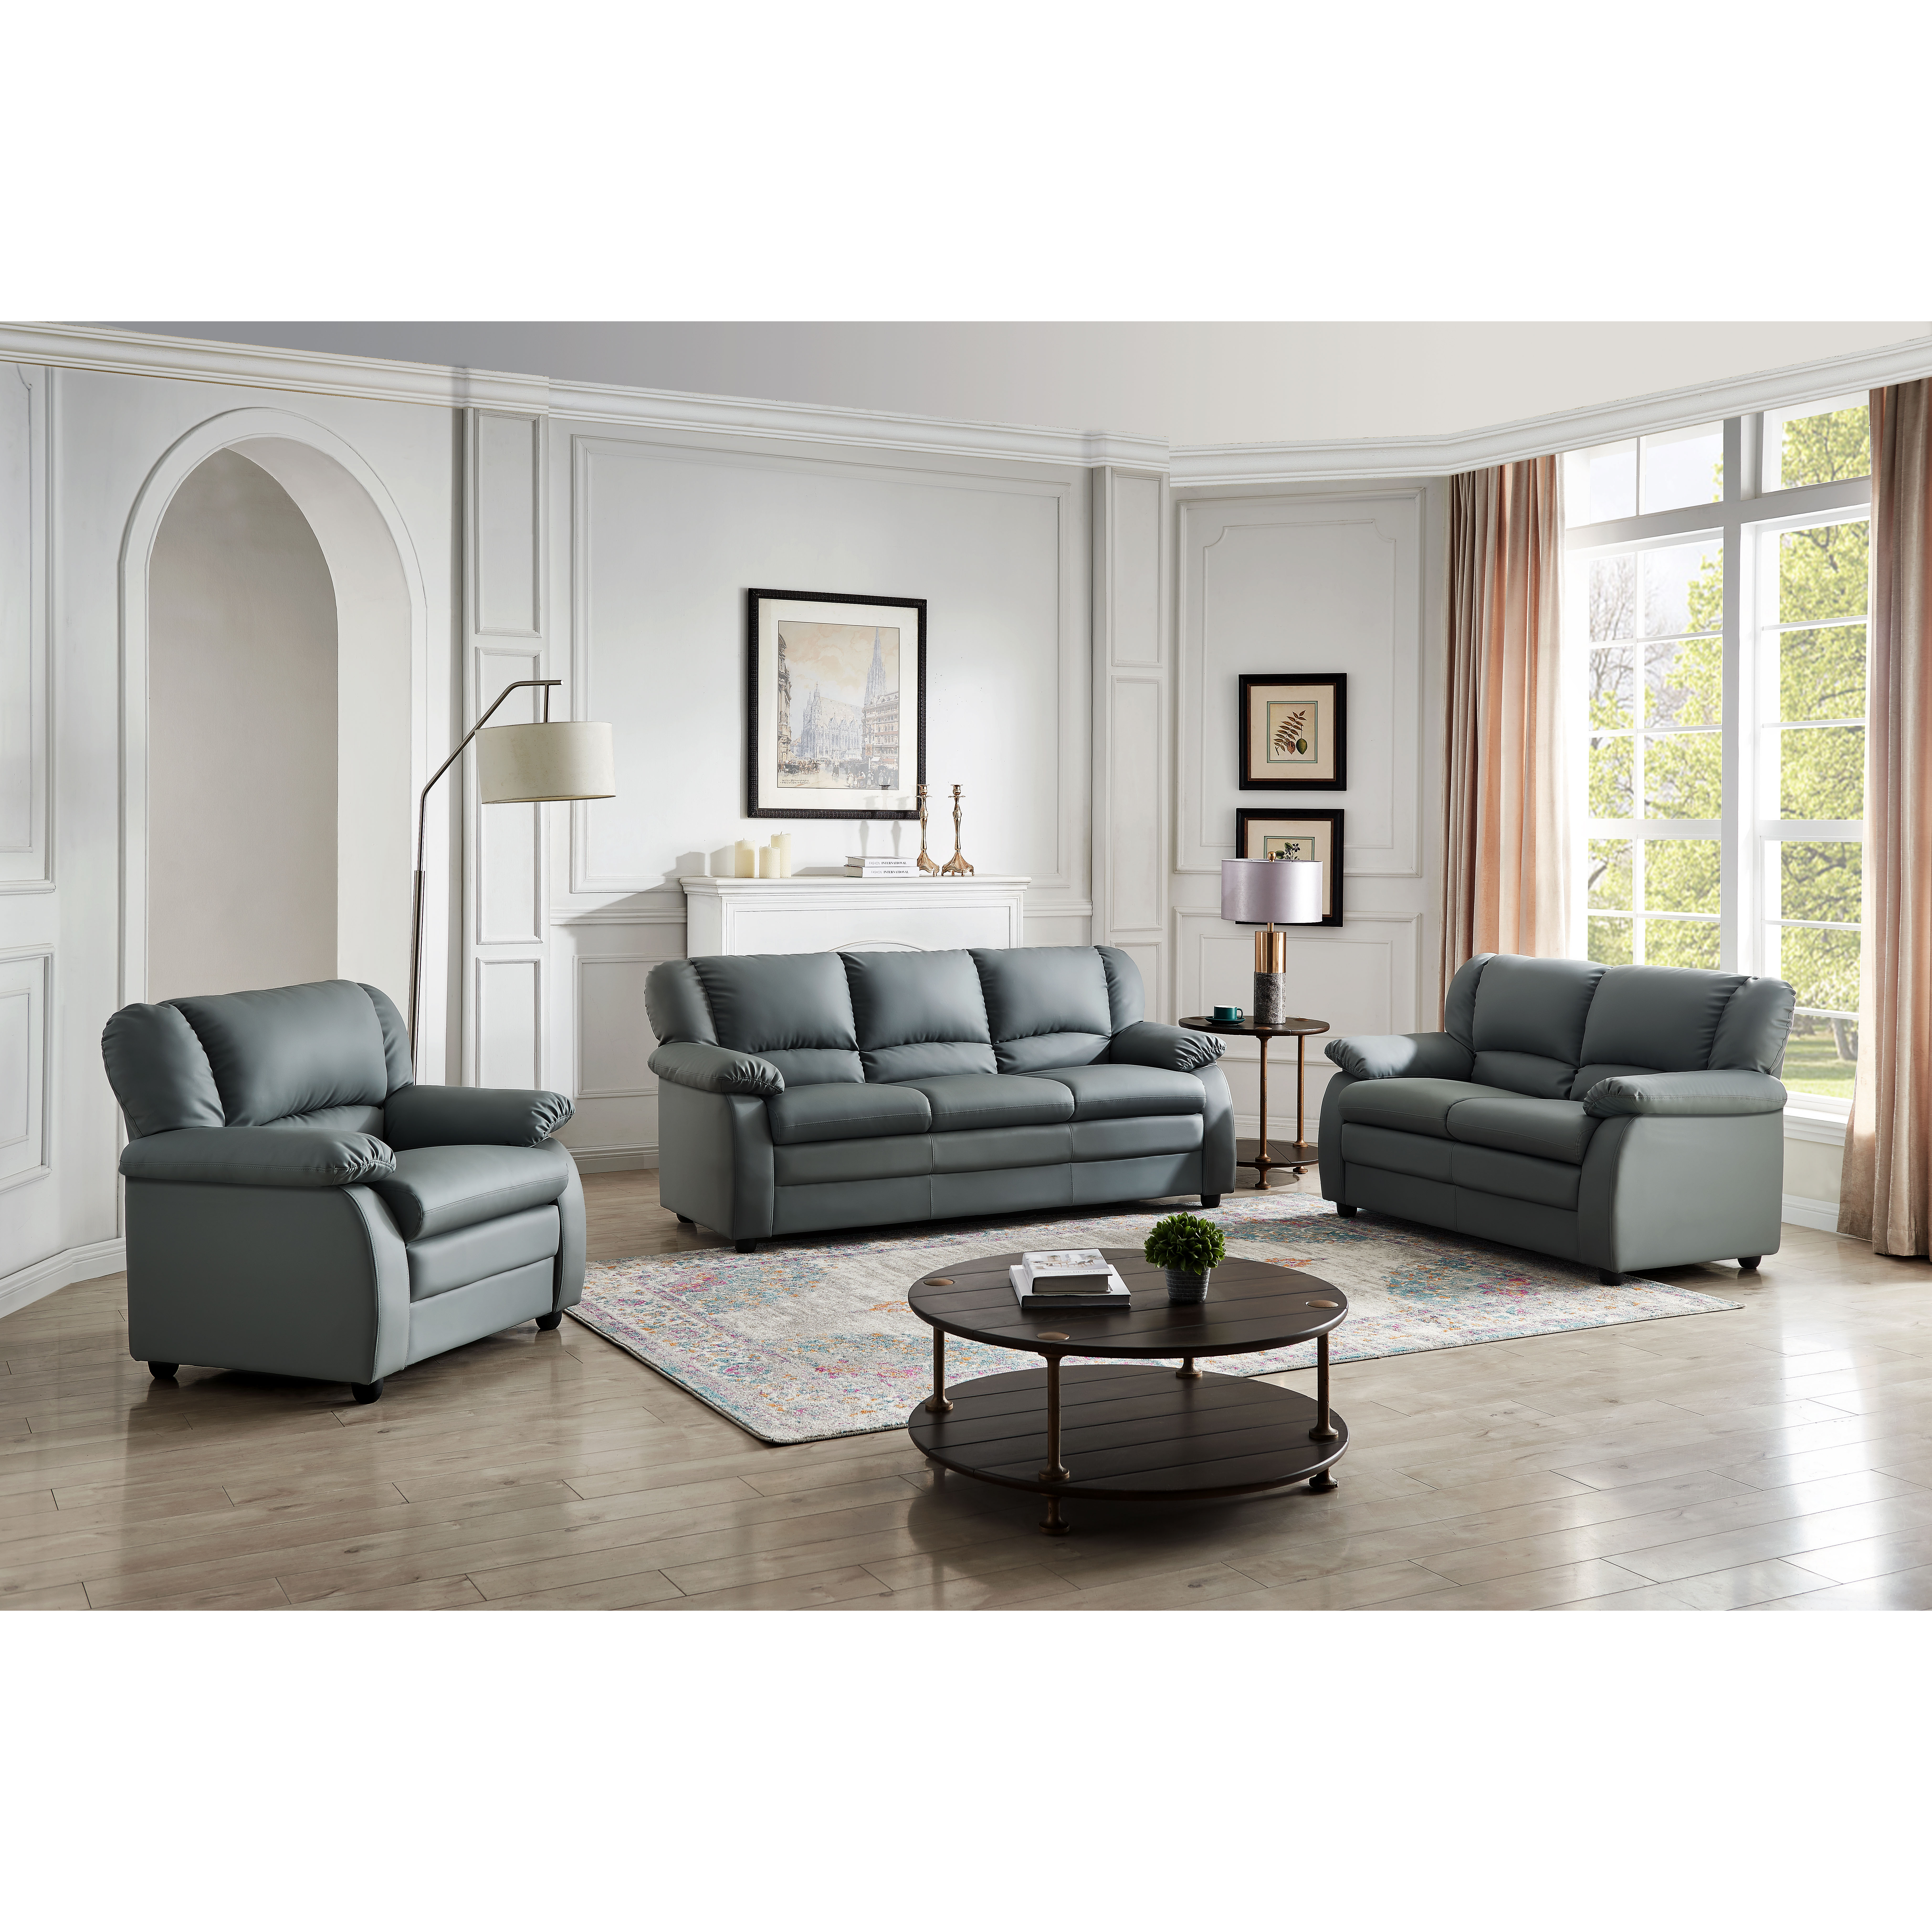 Abanda Leather Living Room Set (Light Gray)